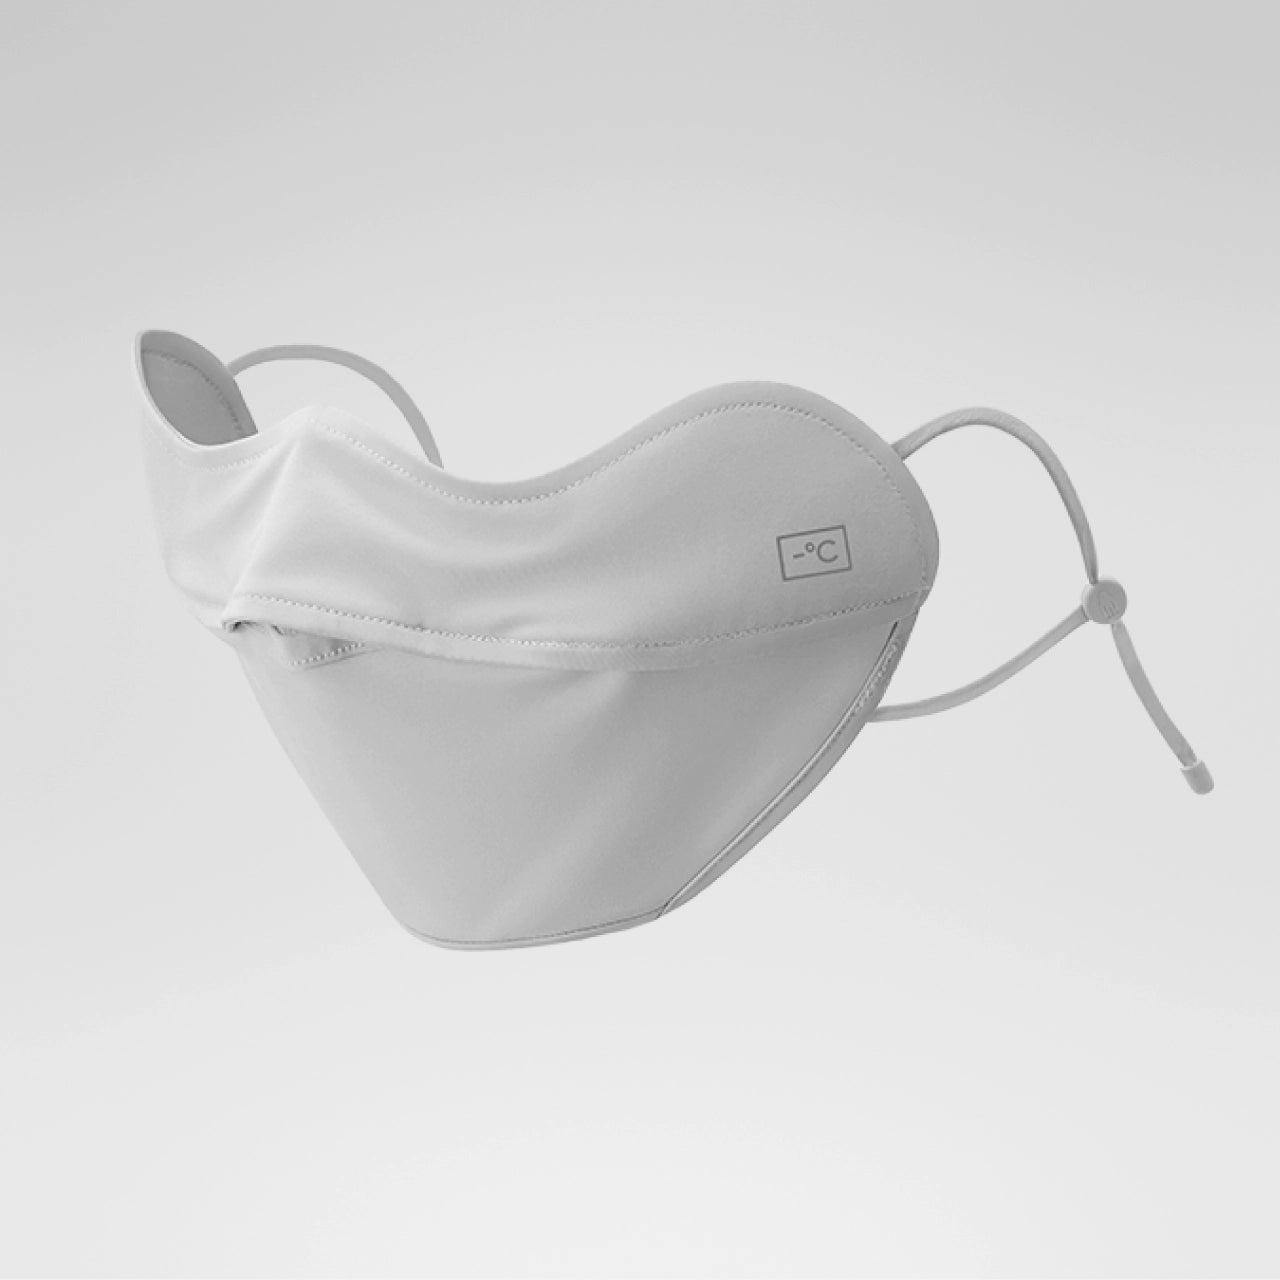 302UV Breathable Antibacterial Eye-Protecting Sunscreen Mask